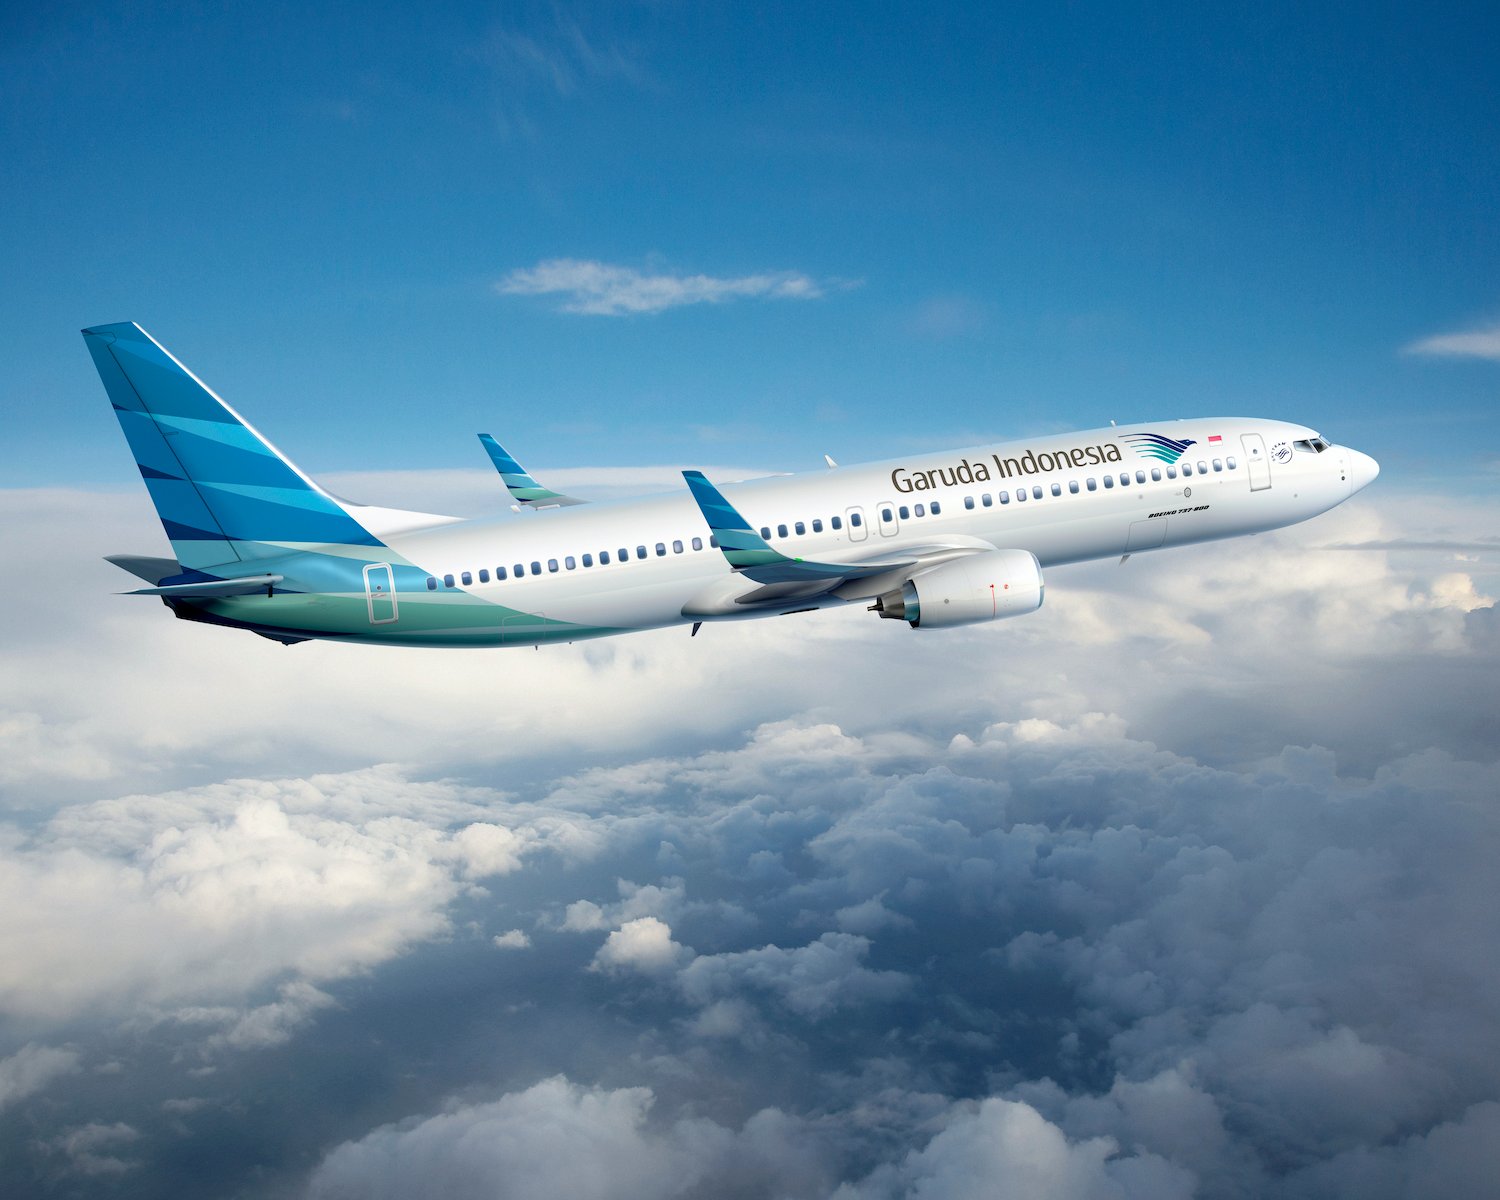 The Airlines of Indonesia - Garuda Indonesia